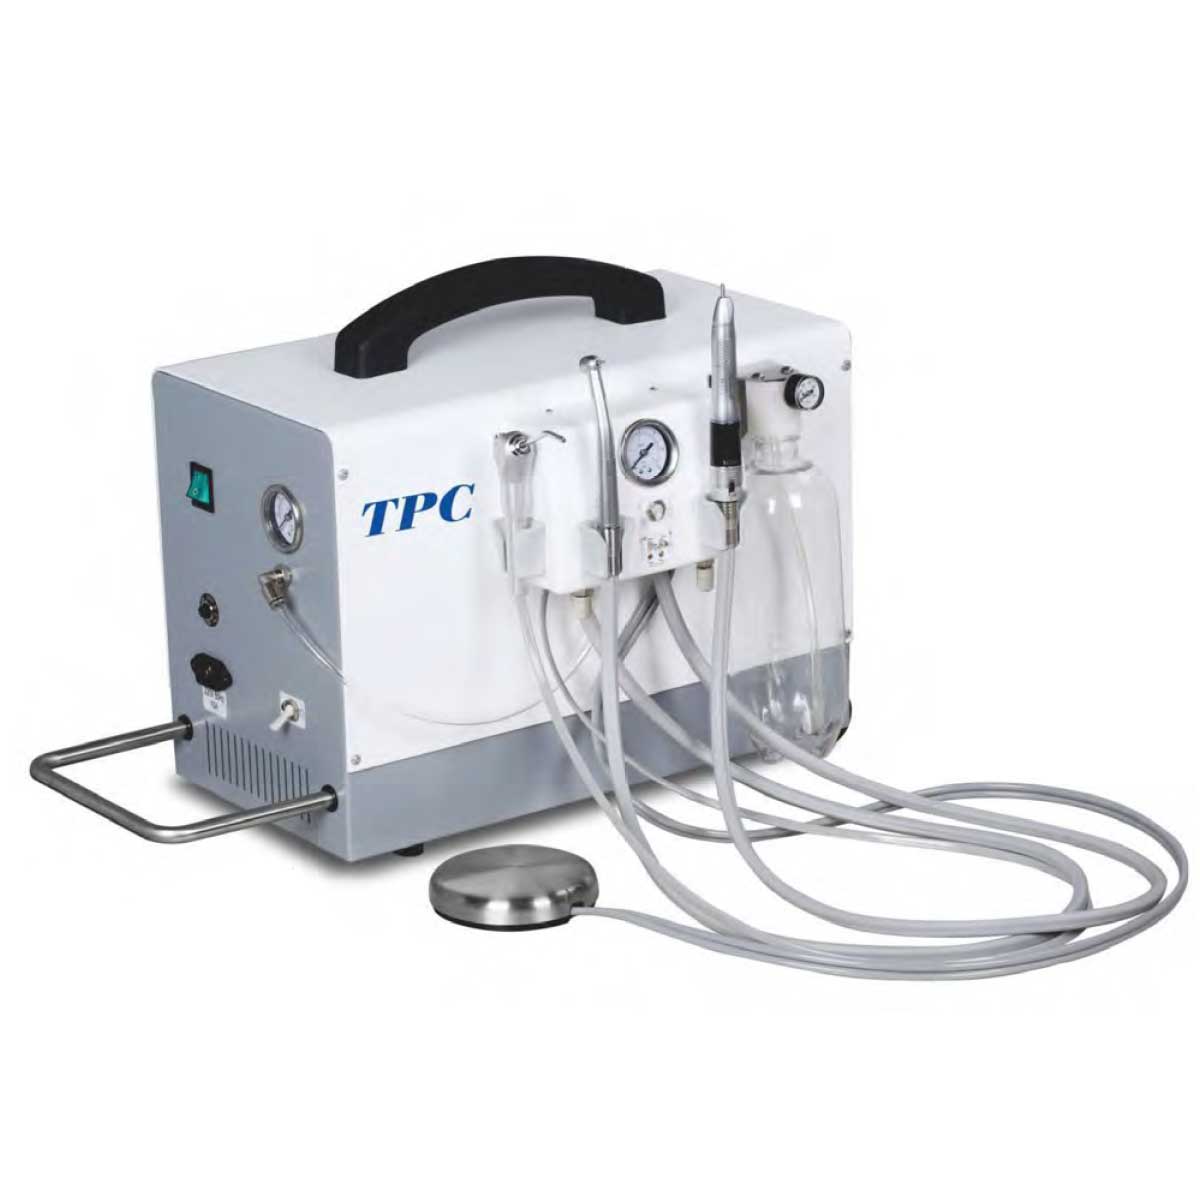 TPC - Portable Dental System PC2635